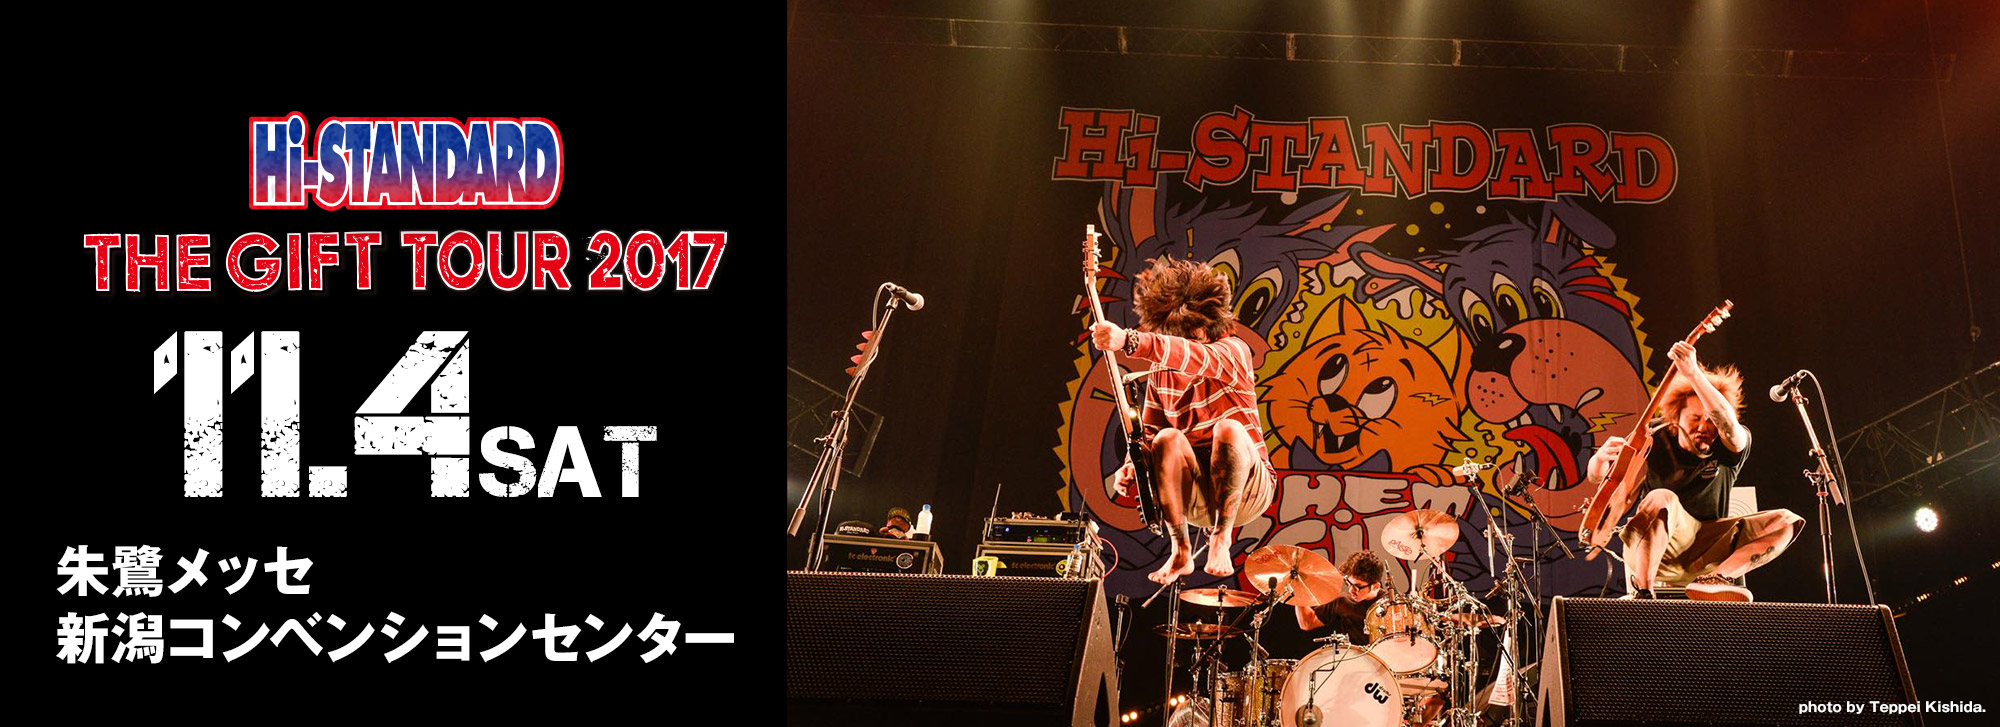 Hi-STANDARD THE GIFT TOUR 2017 11.4 SAT 朱鷺メッセ 新潟コンベンションセンター